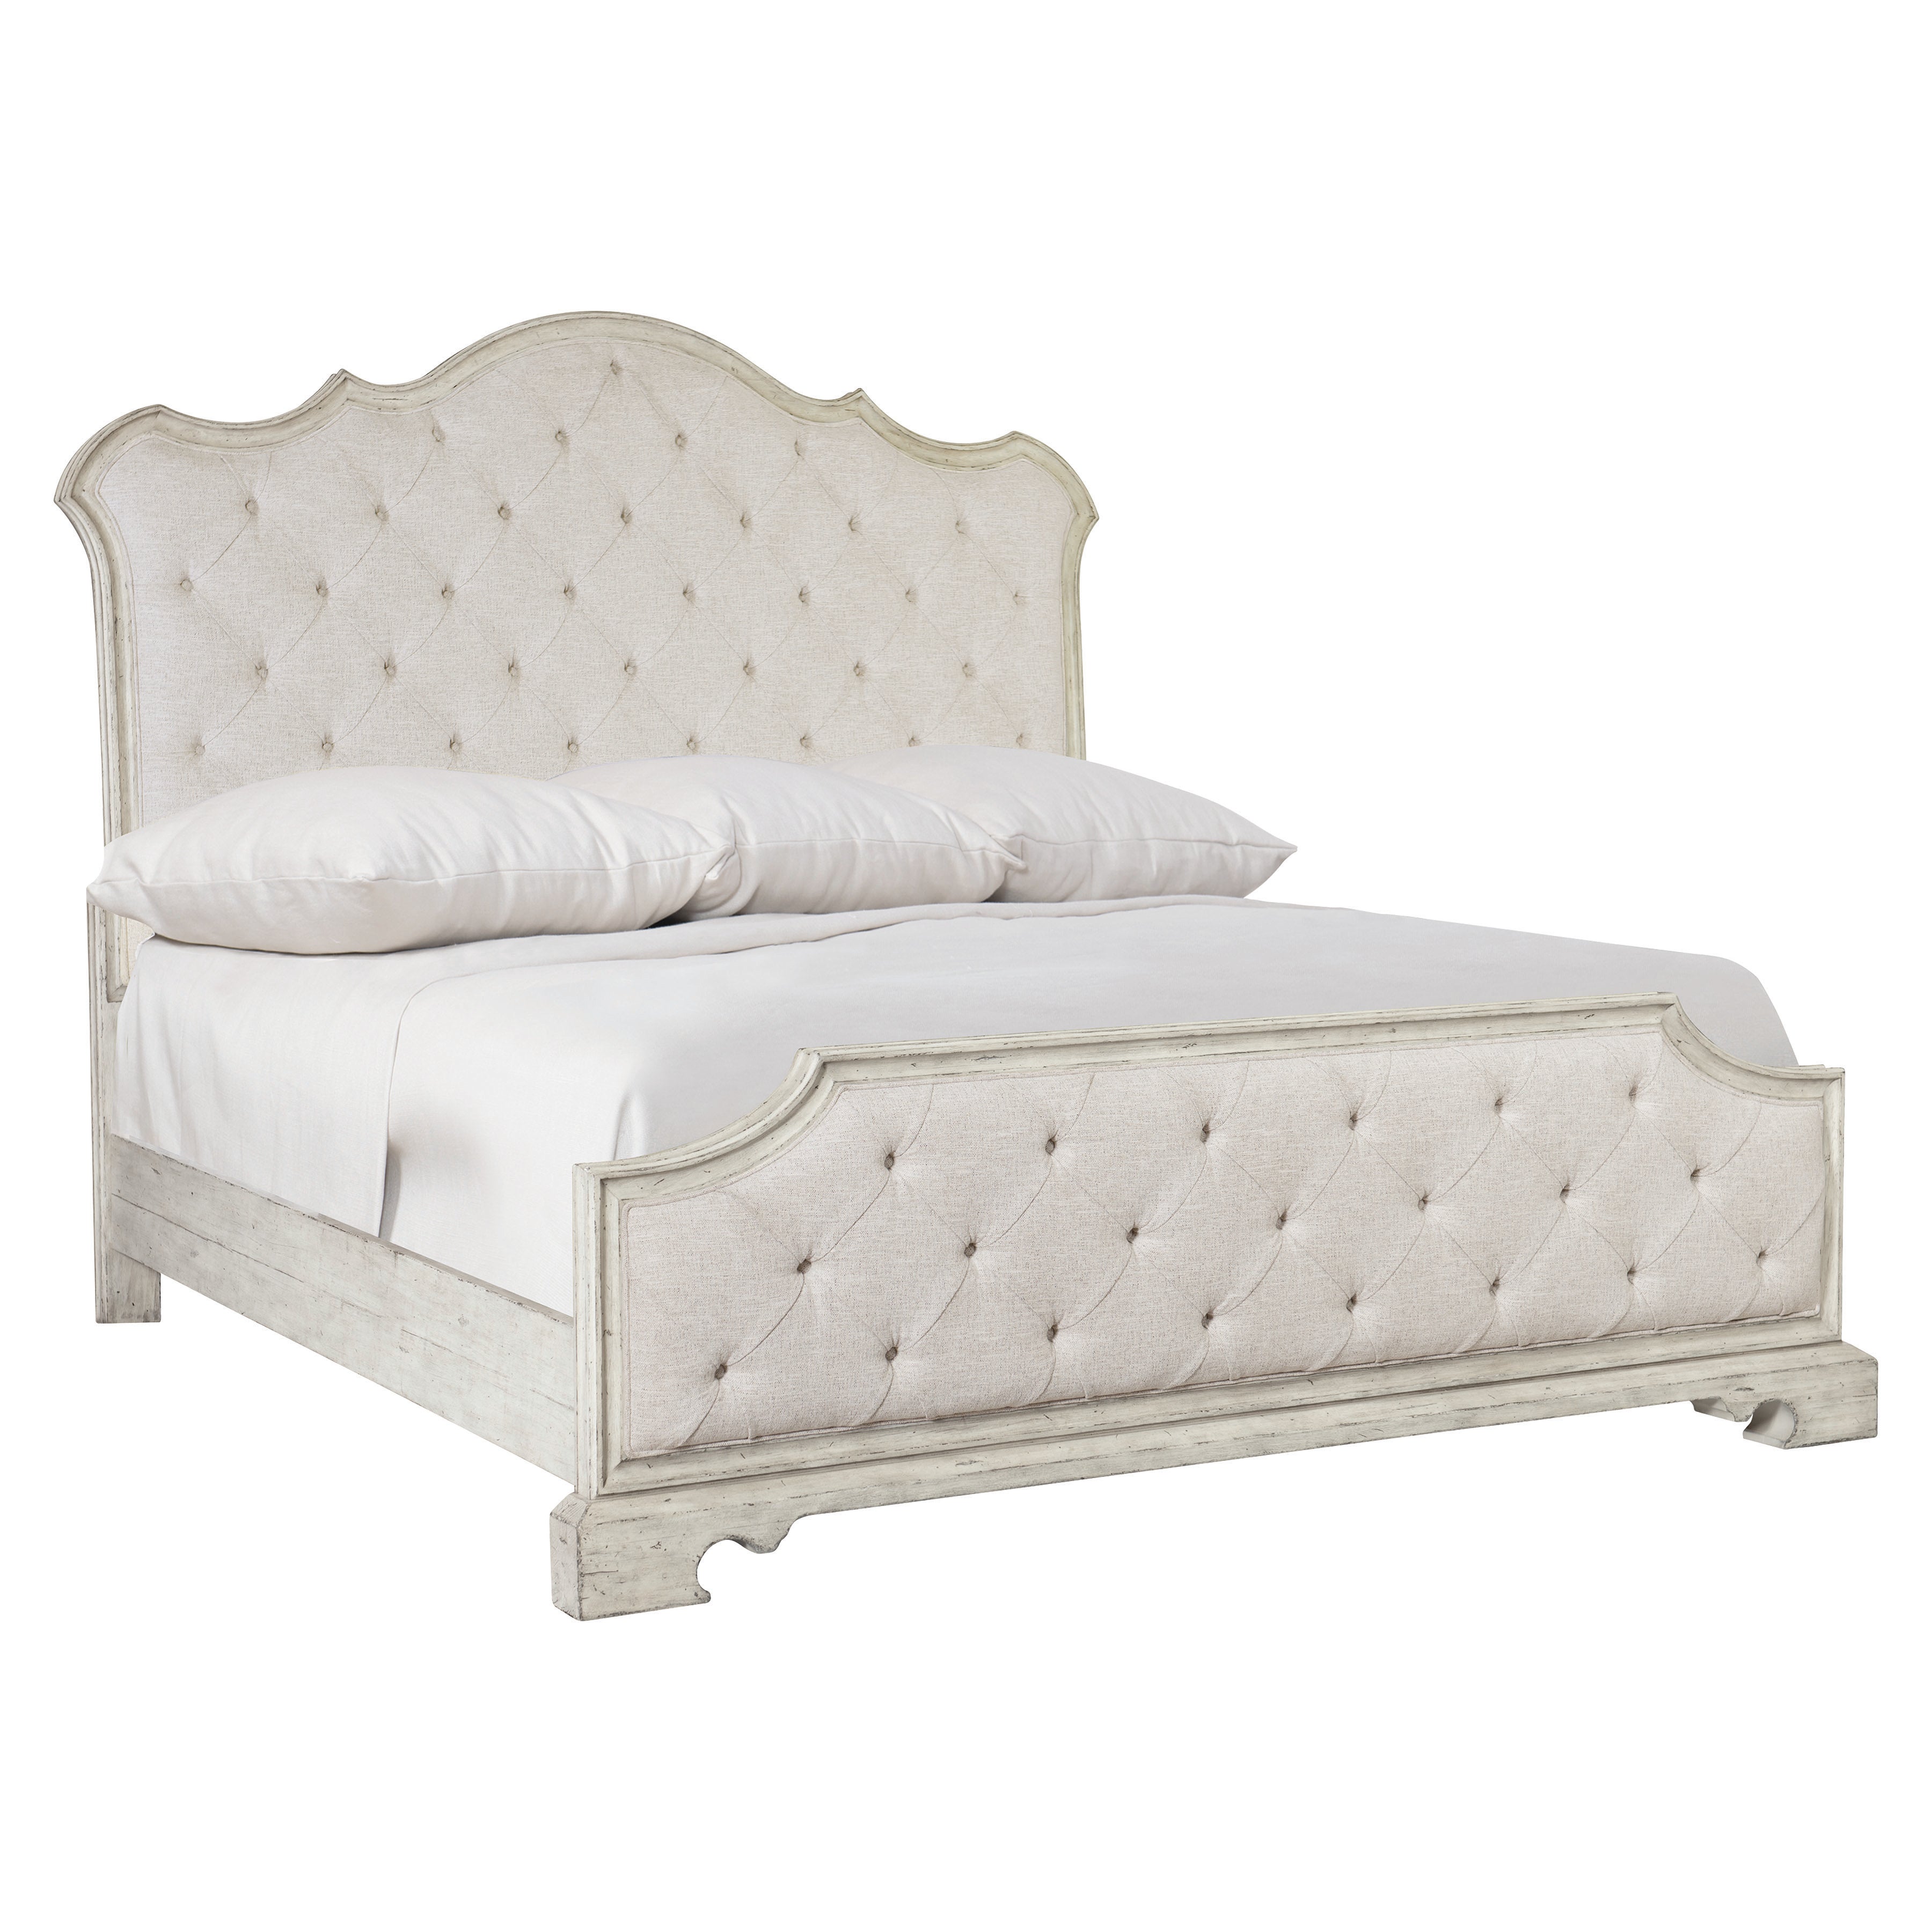 Mirabelle Upholstered King Panel Bed